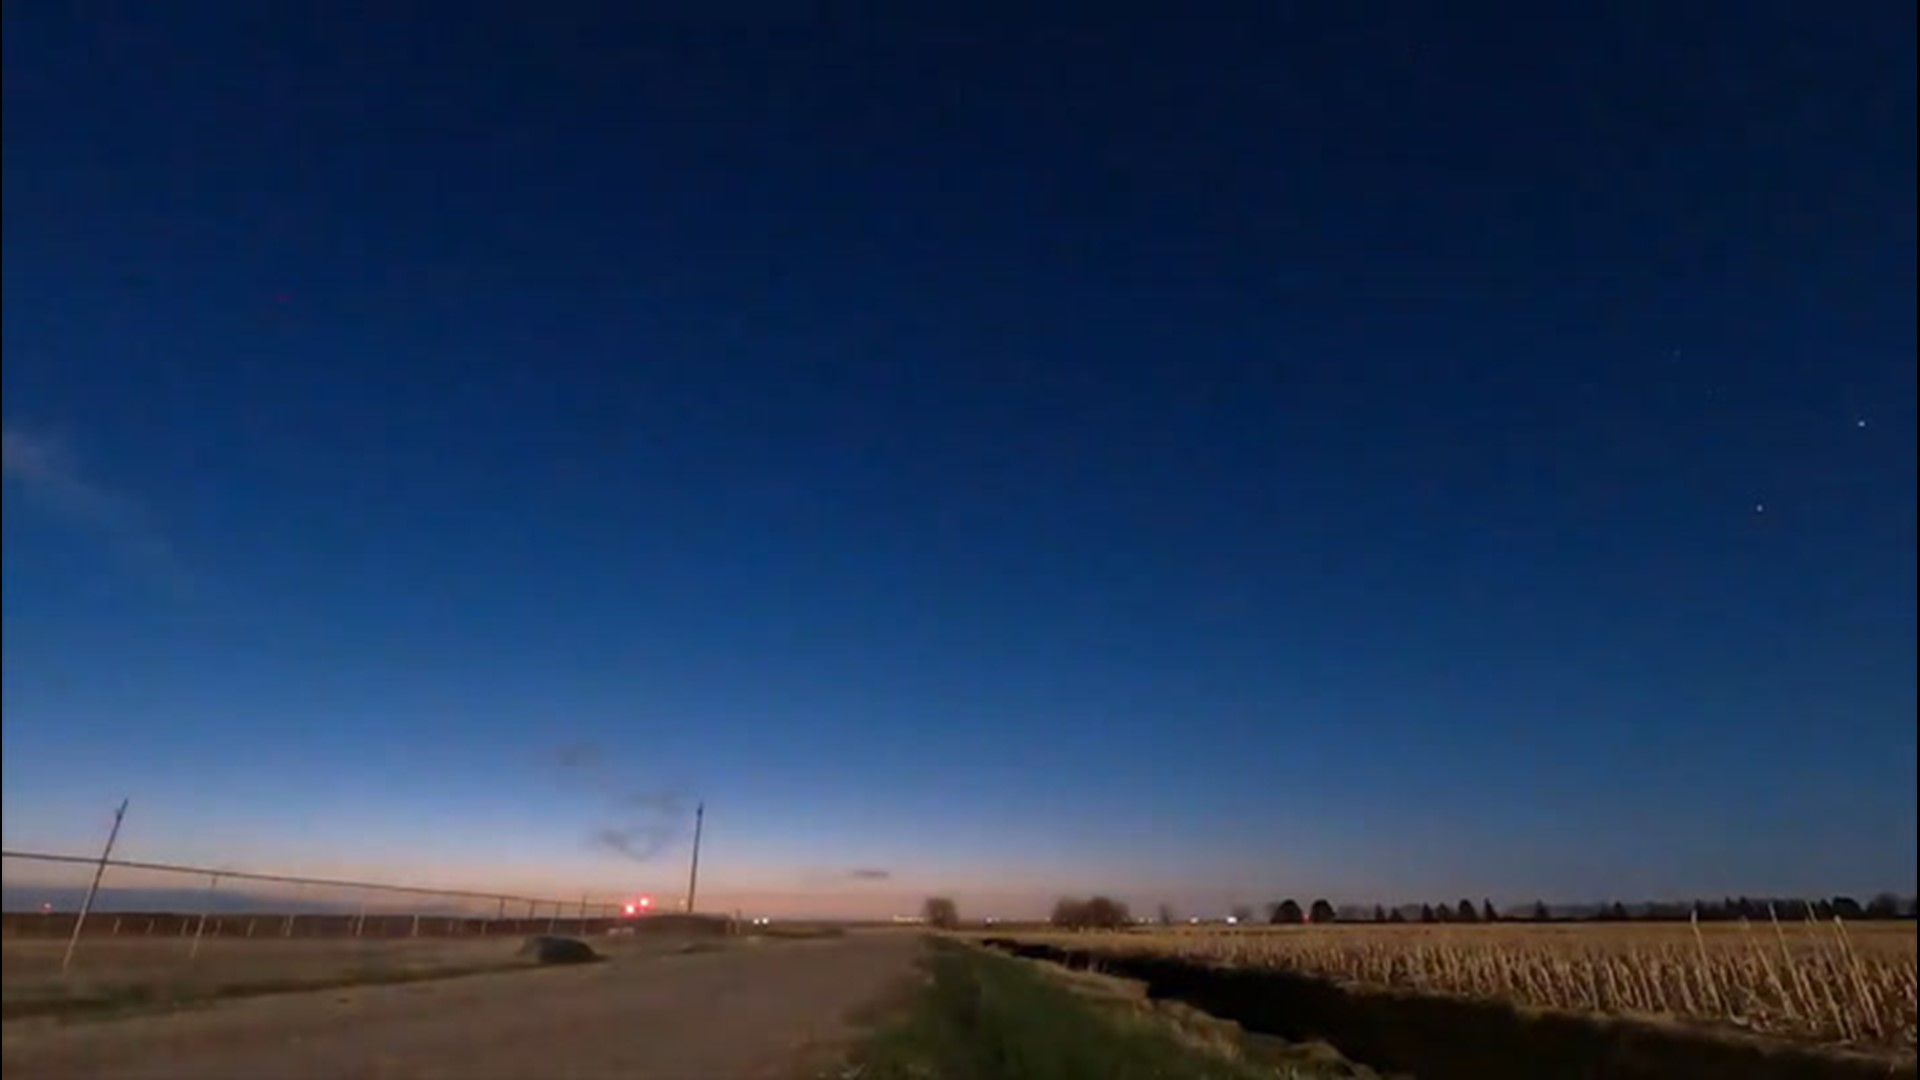 On April 8, as the sun rose over Goodland, Kansas, the dark indigo sky turned into a vibrant mix of blue and orange.